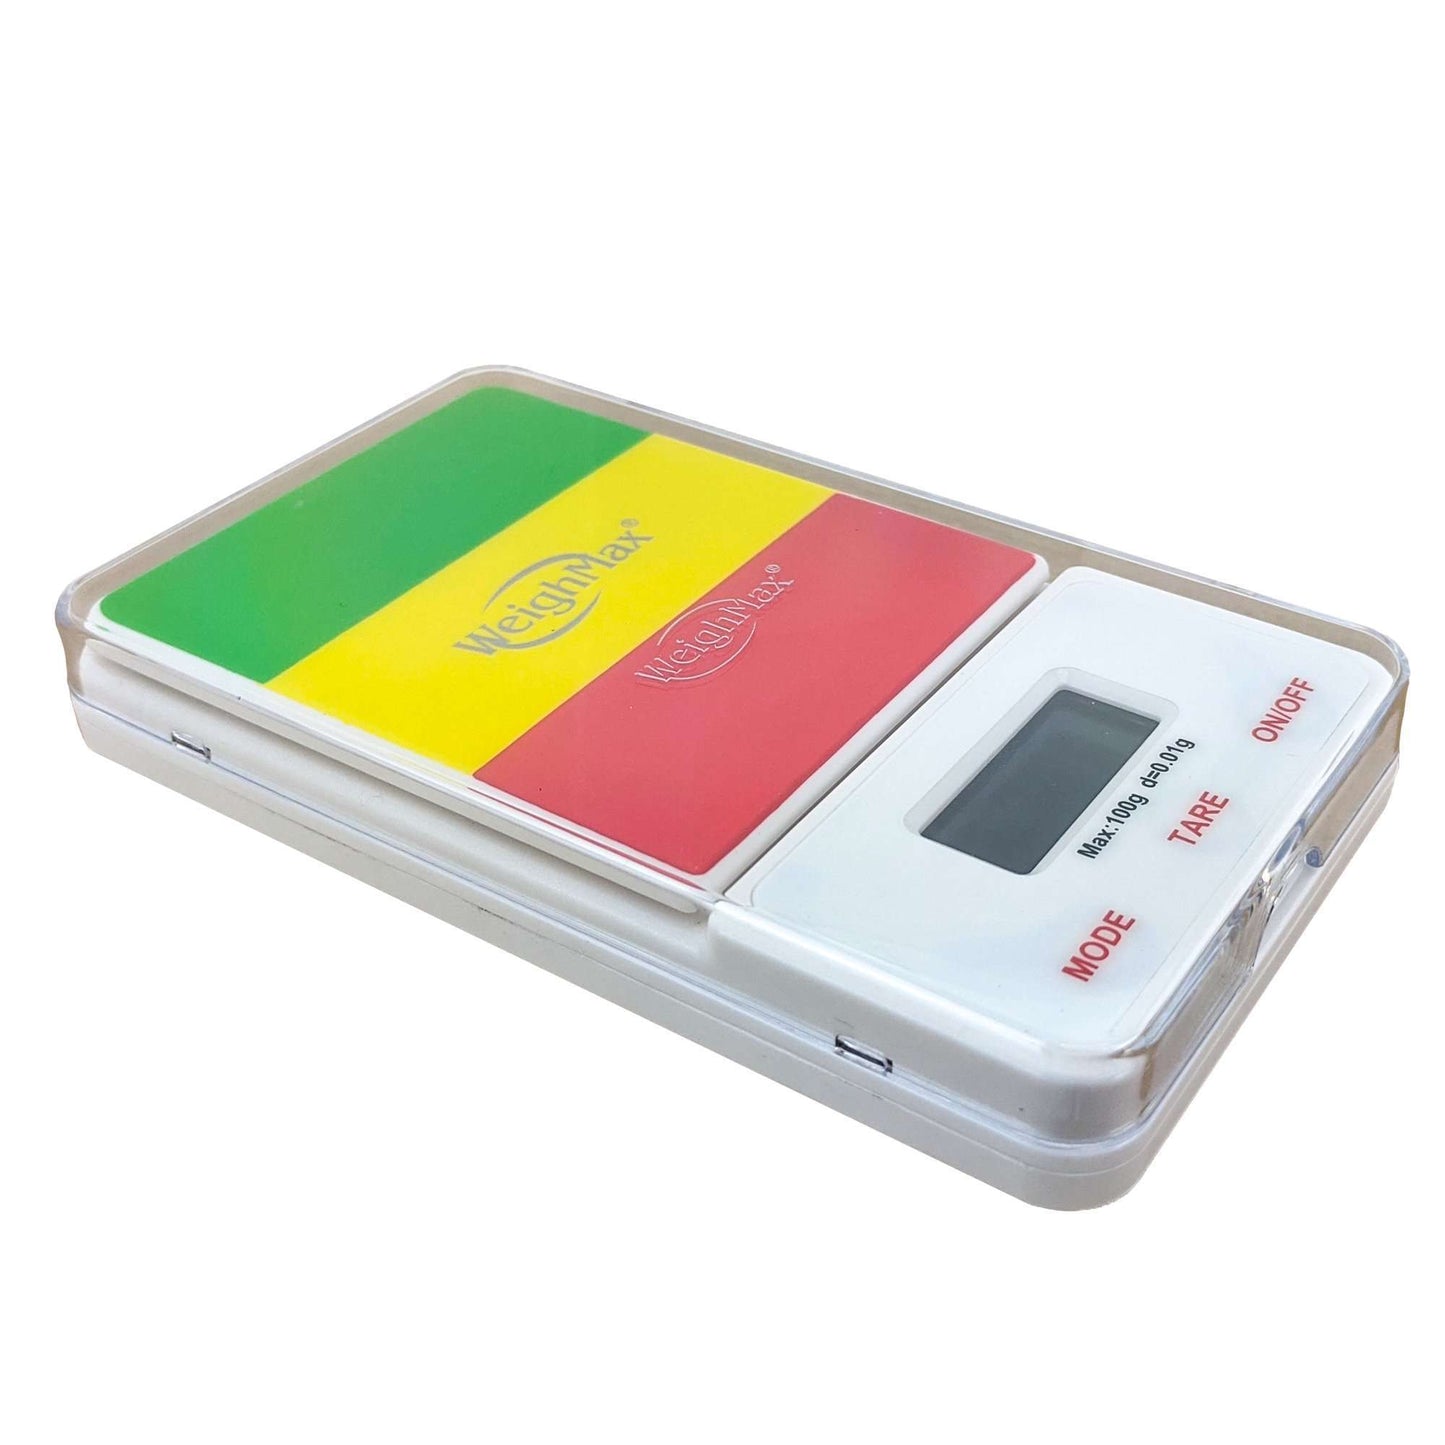 WeighMax Ninja Pocket Scale 100g x 0.01g RA-100 - Rasta